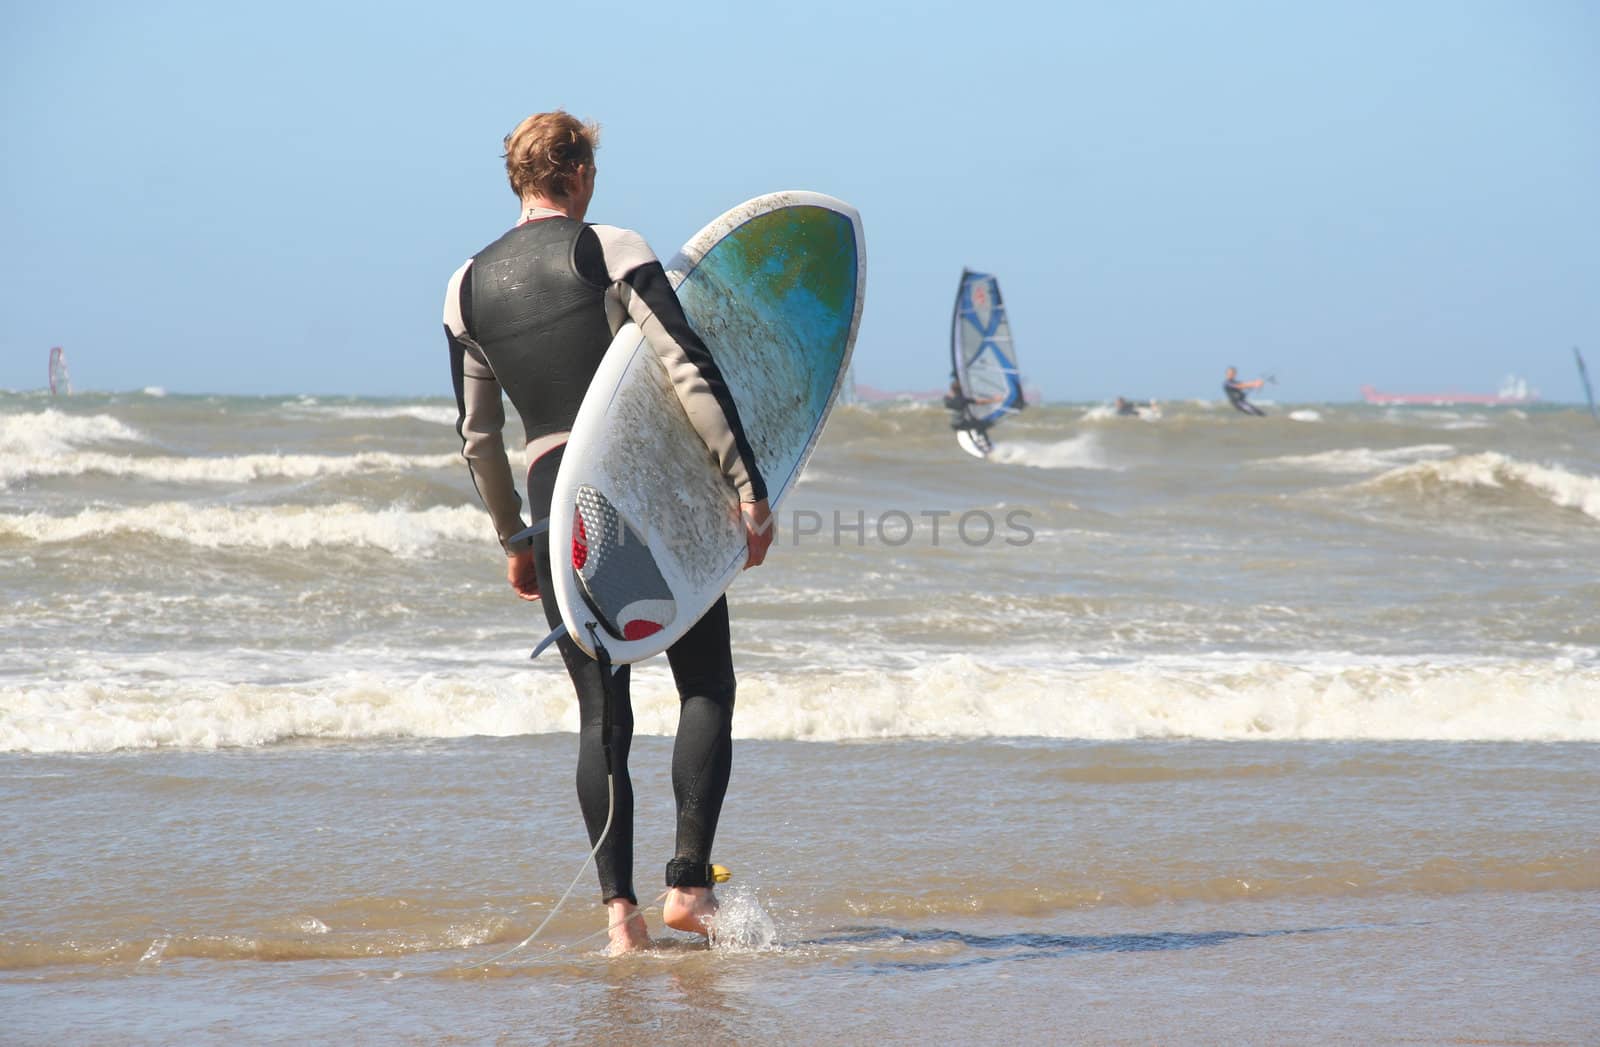 Scheveningen Surf Competition: Surfer with surfboard walking into the surf